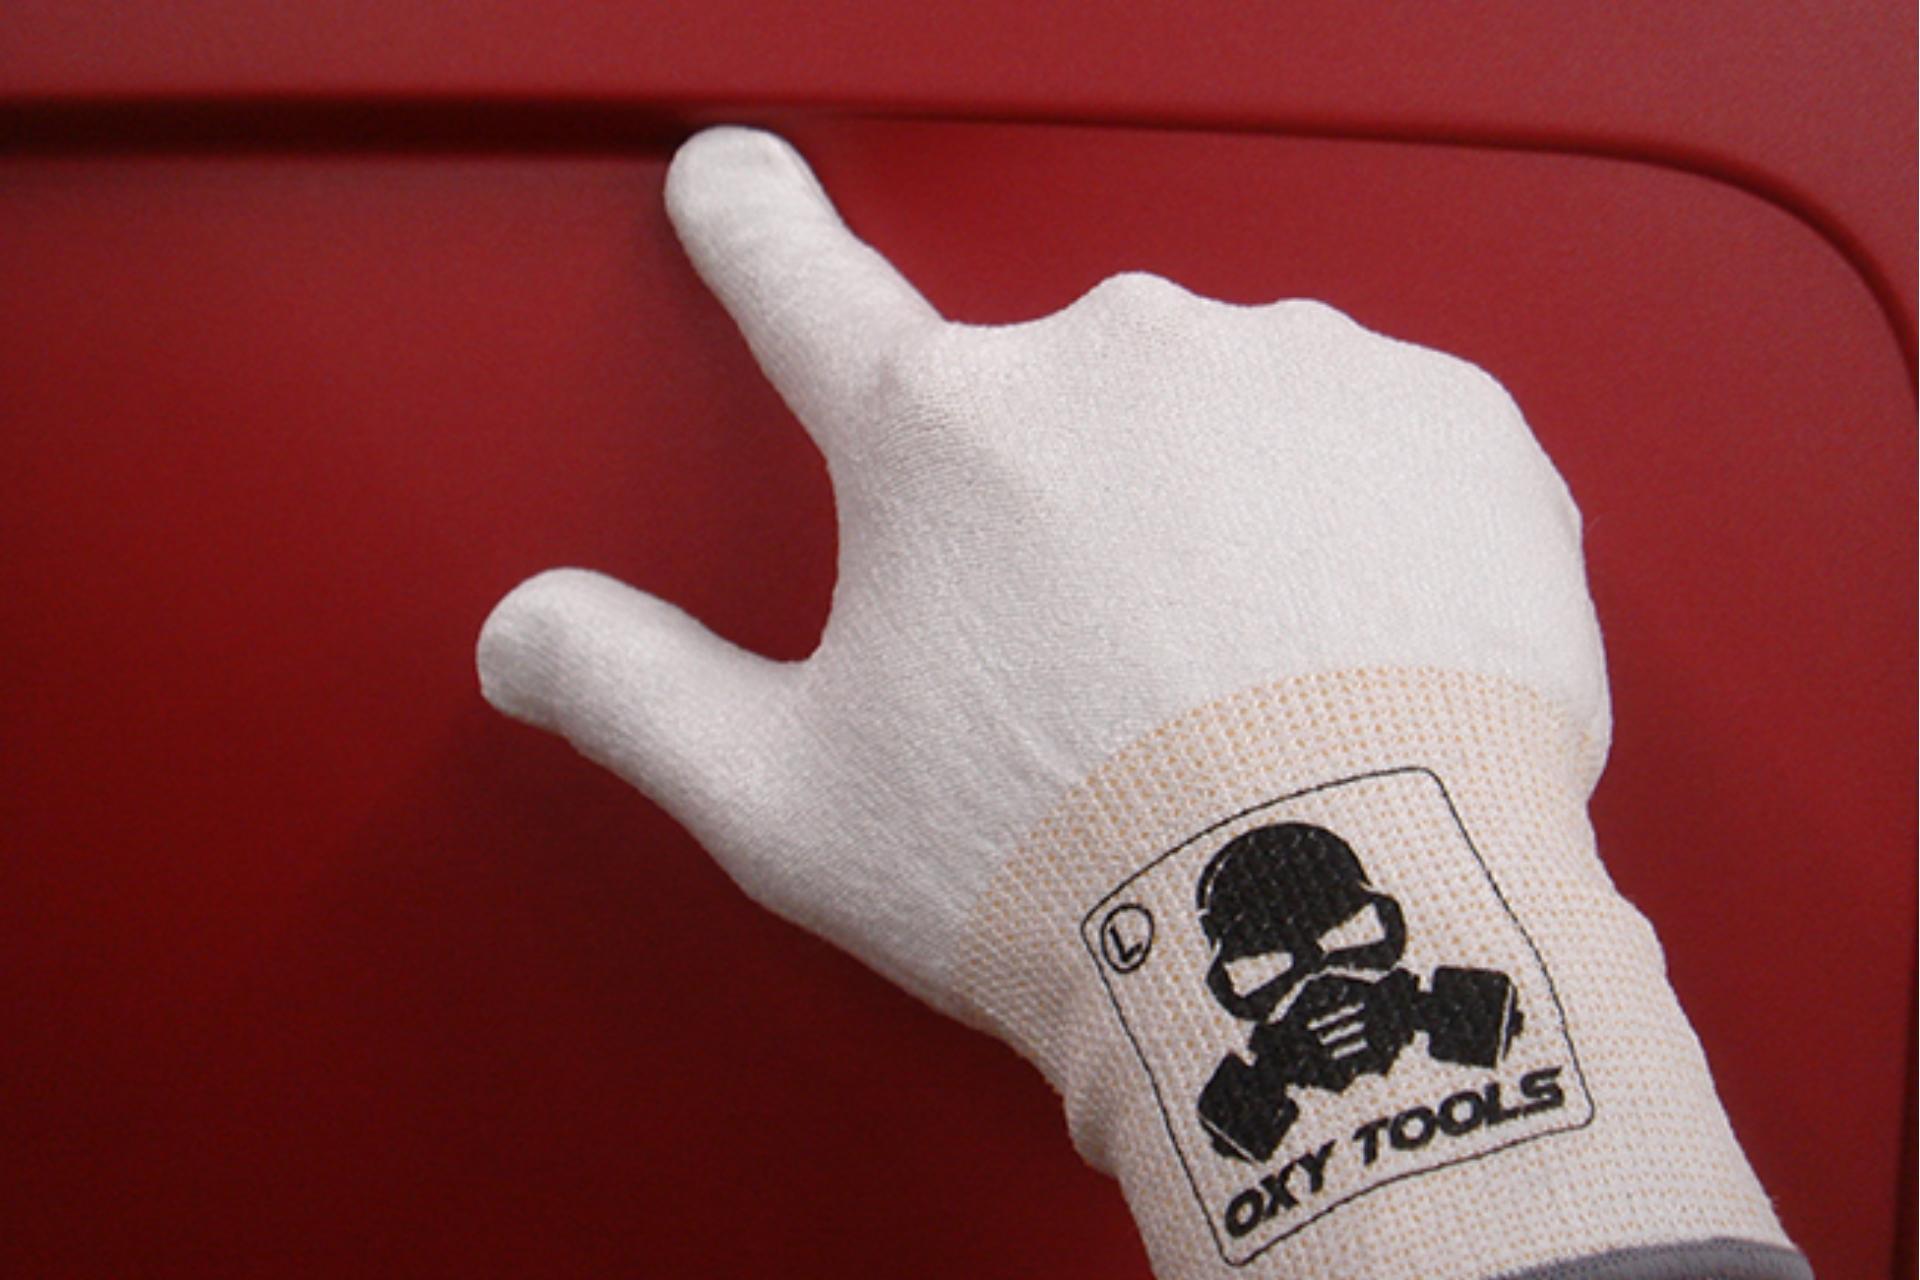 Foto: Oxy Tools Revolution Wrapping Glove - Größe: L